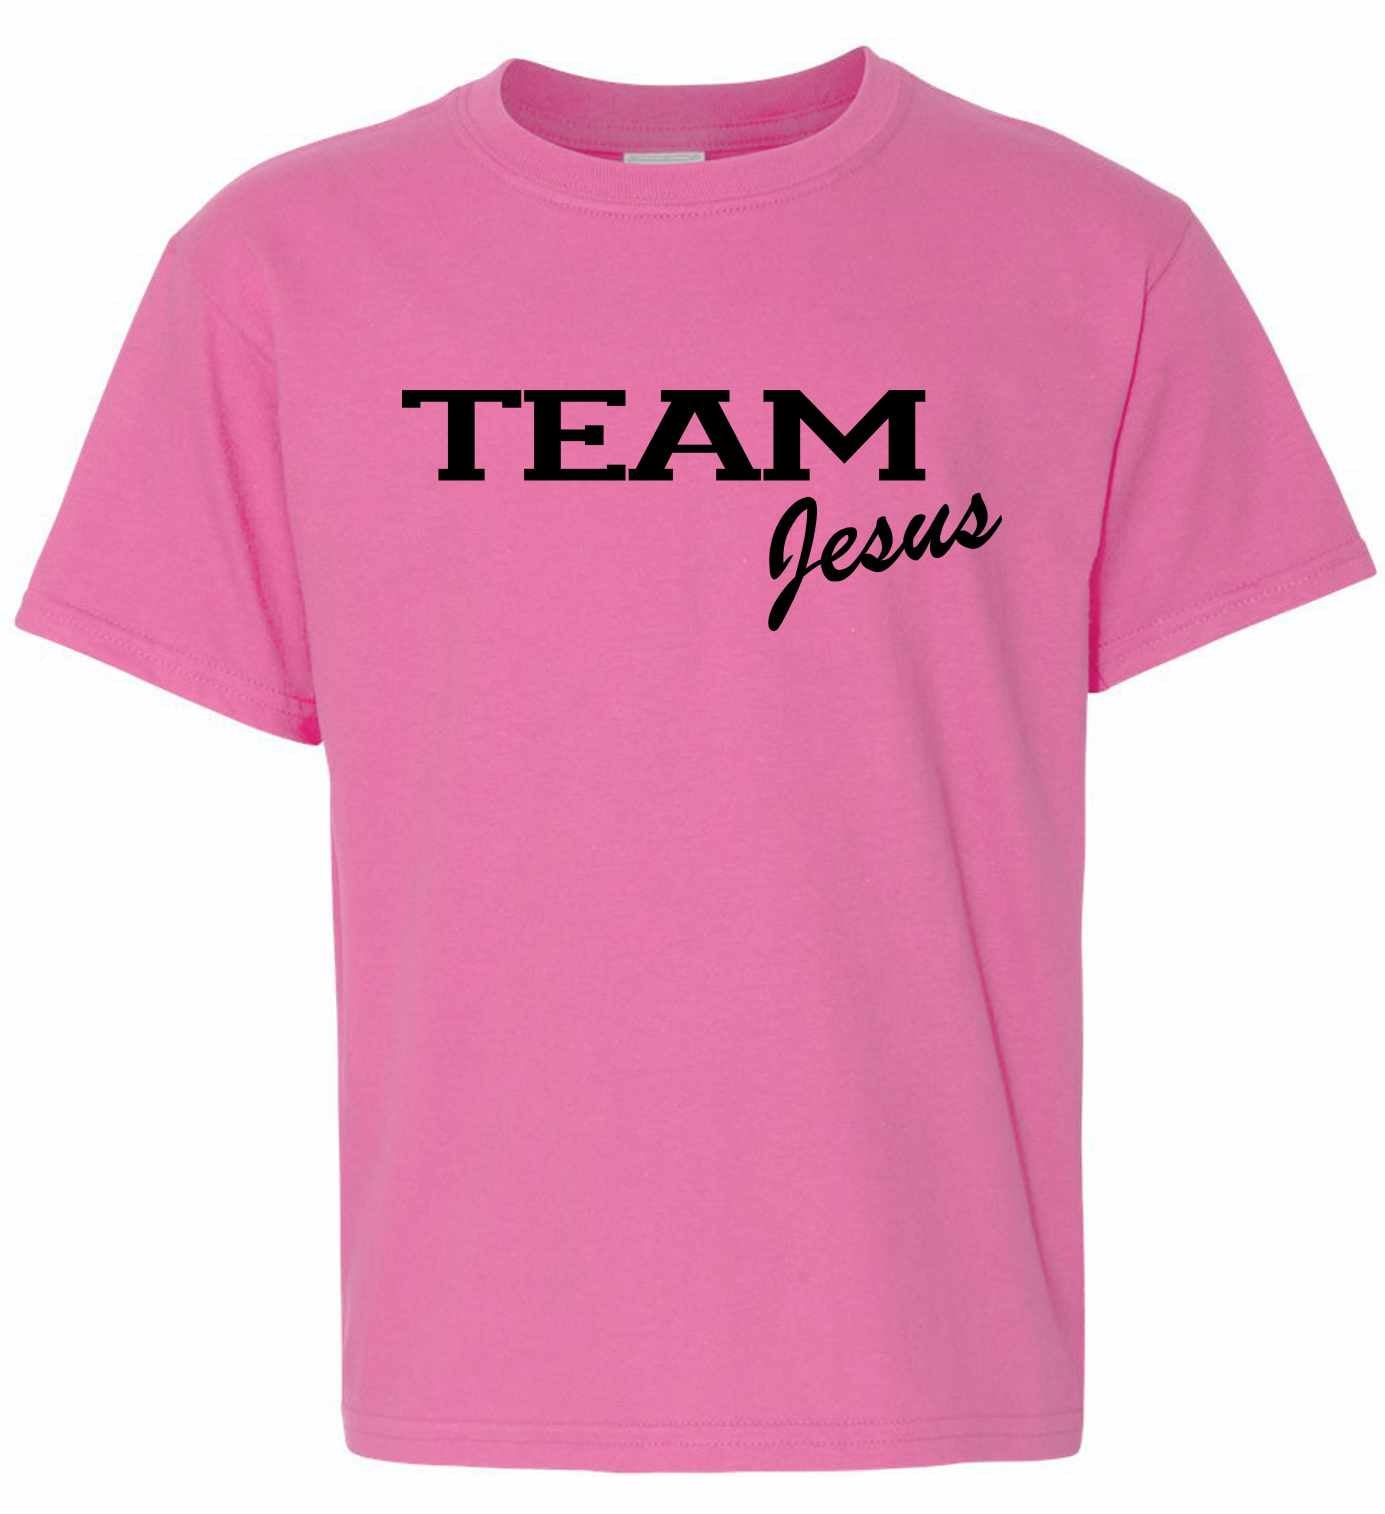 TEAM Jesus on Kids T-Shirt (#225-201)